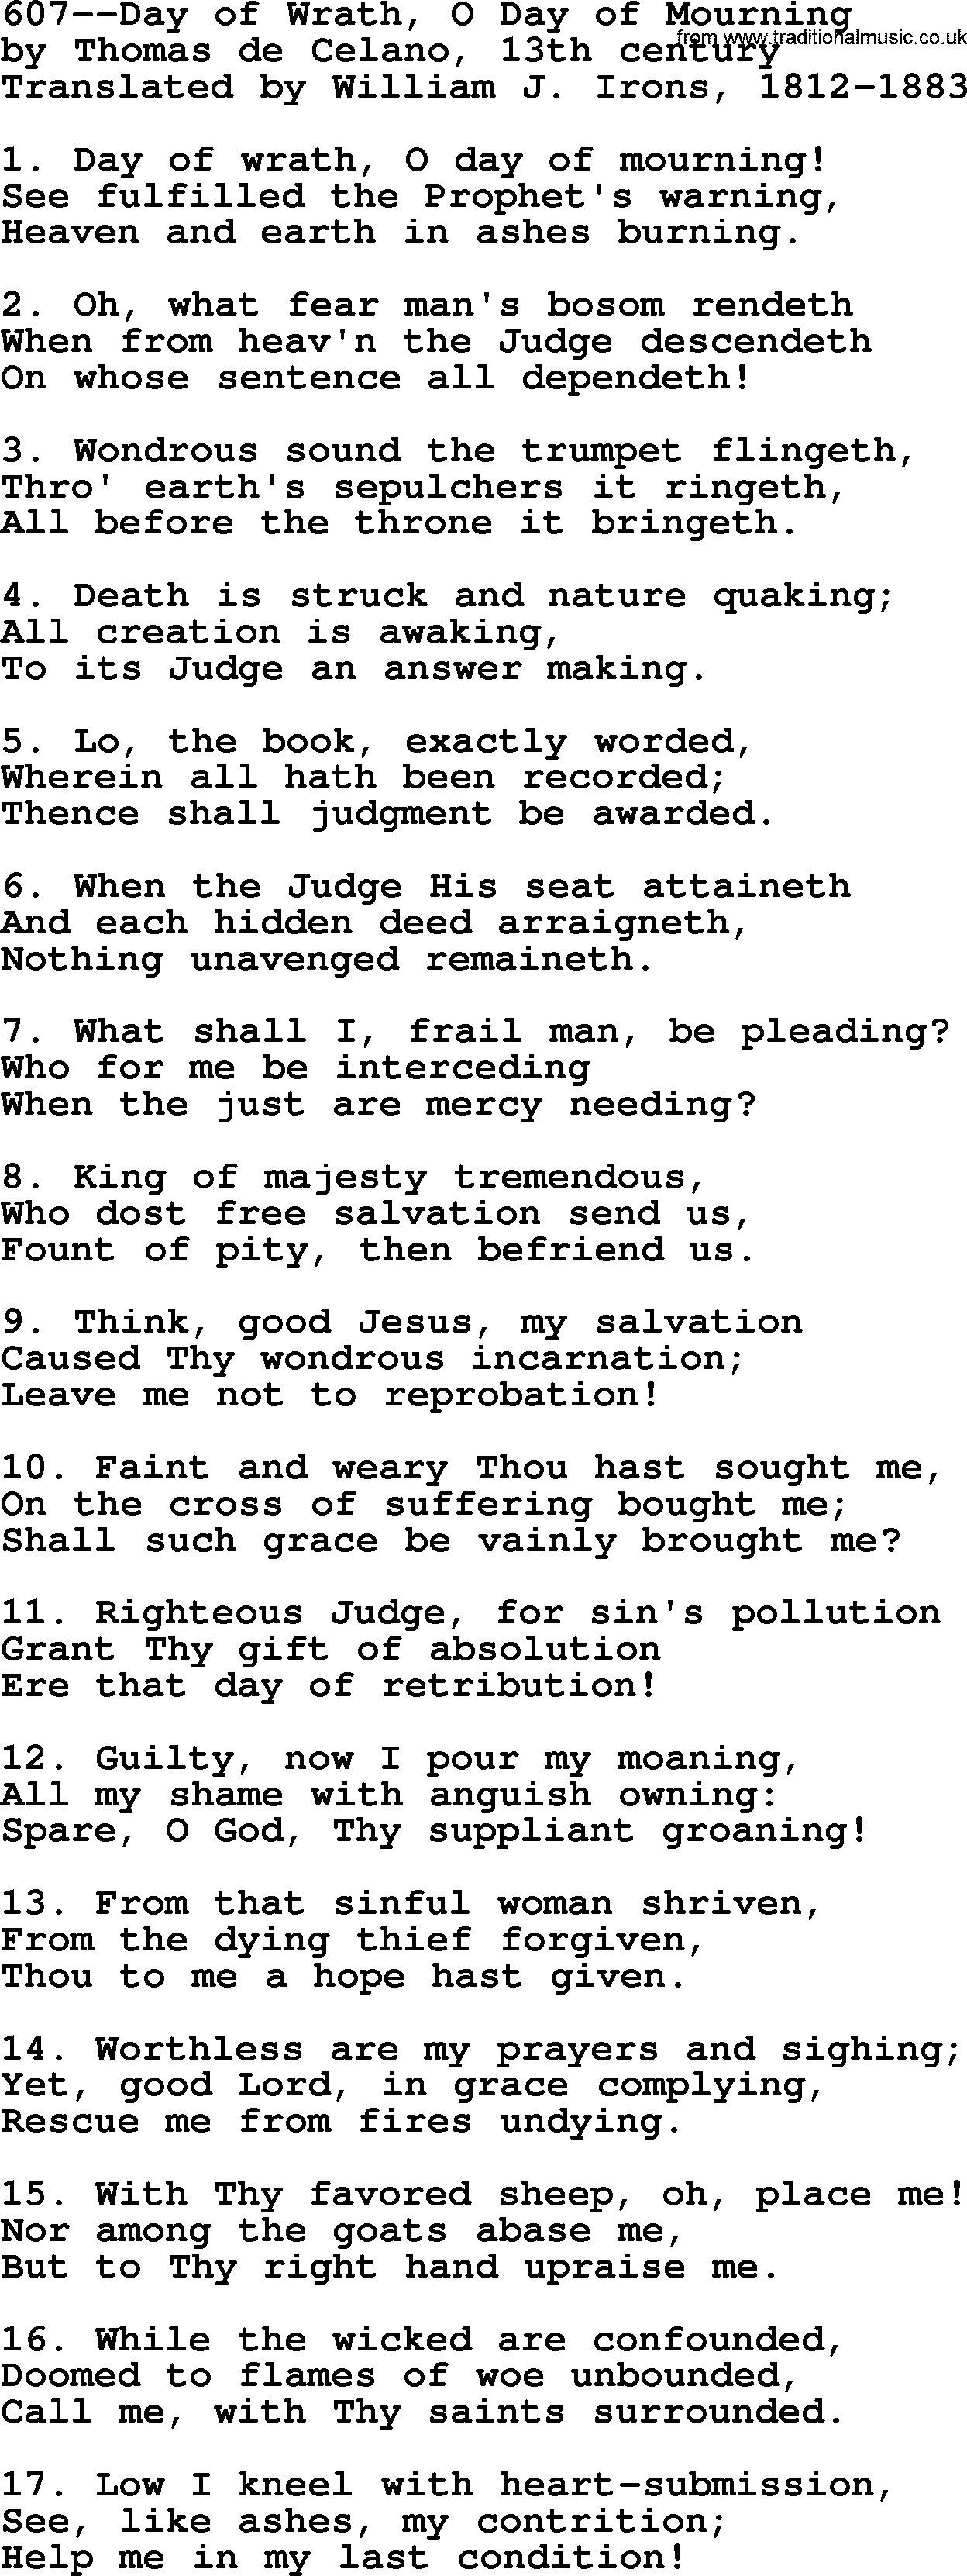 Lutheran Hymn: 607--Day of Wrath, O Day of Mourning.txt lyrics with PDF